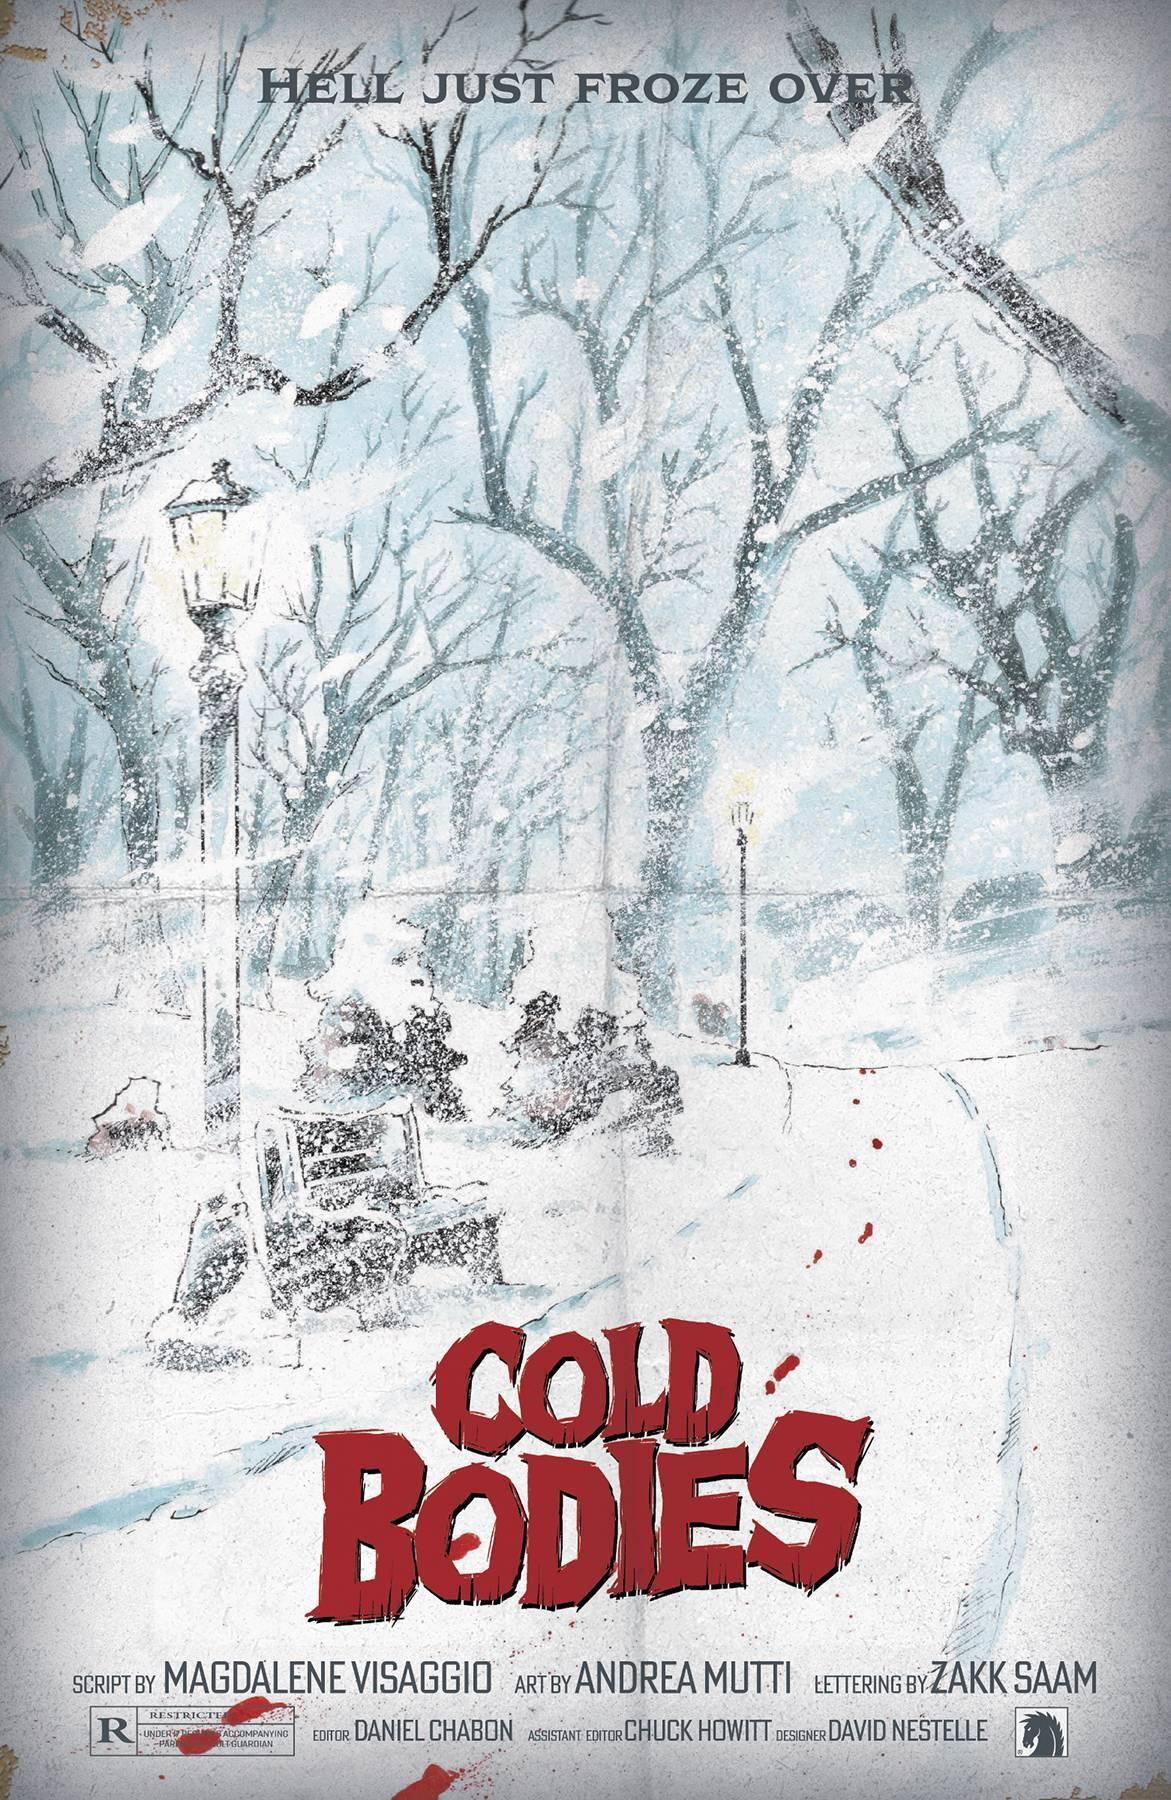 COLD BODIES TP - Kings Comics